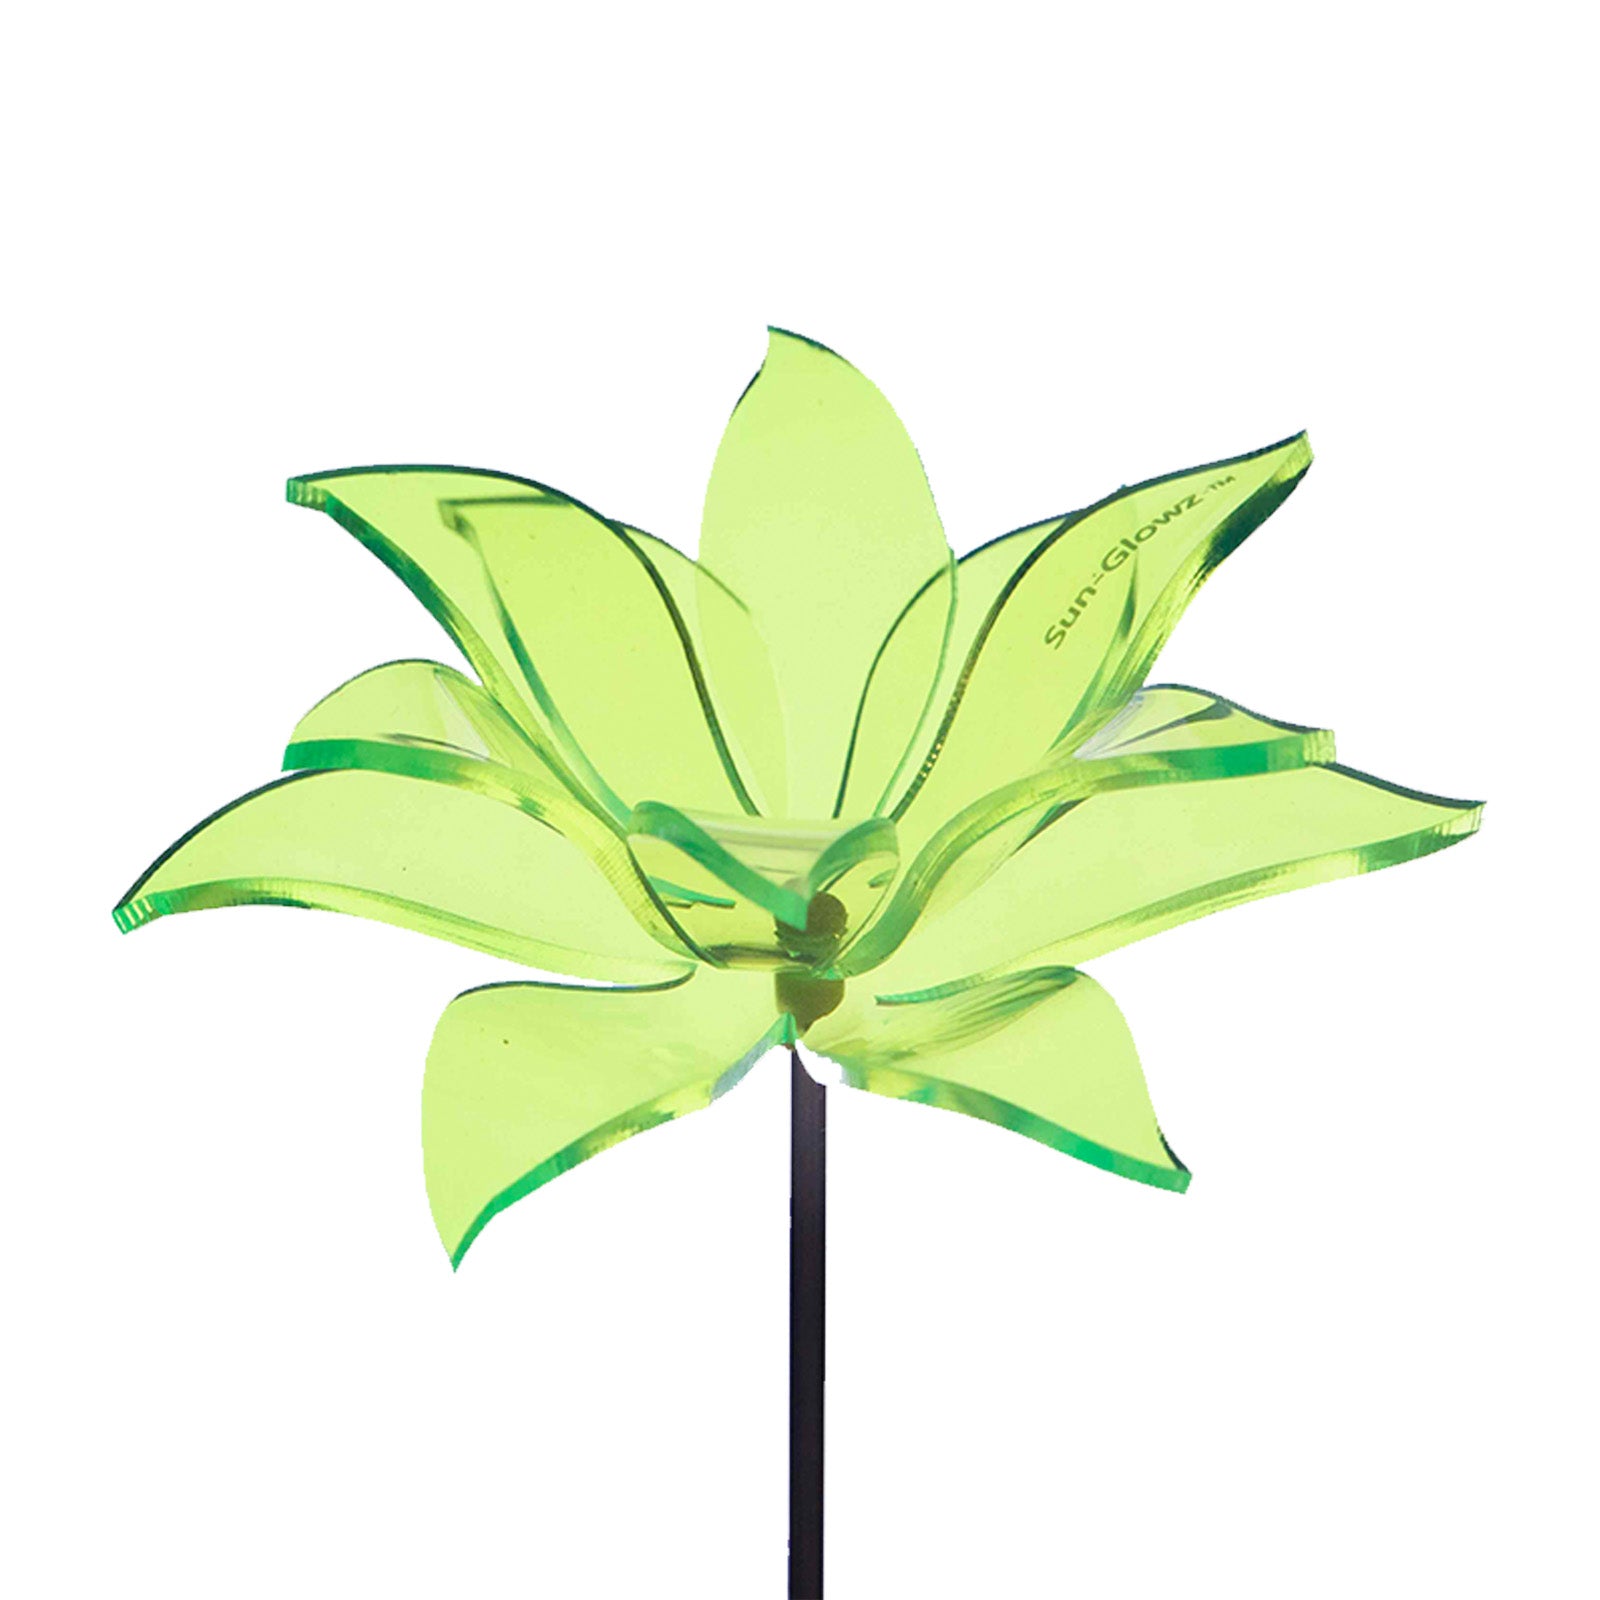 SUNDROP (Flower One)